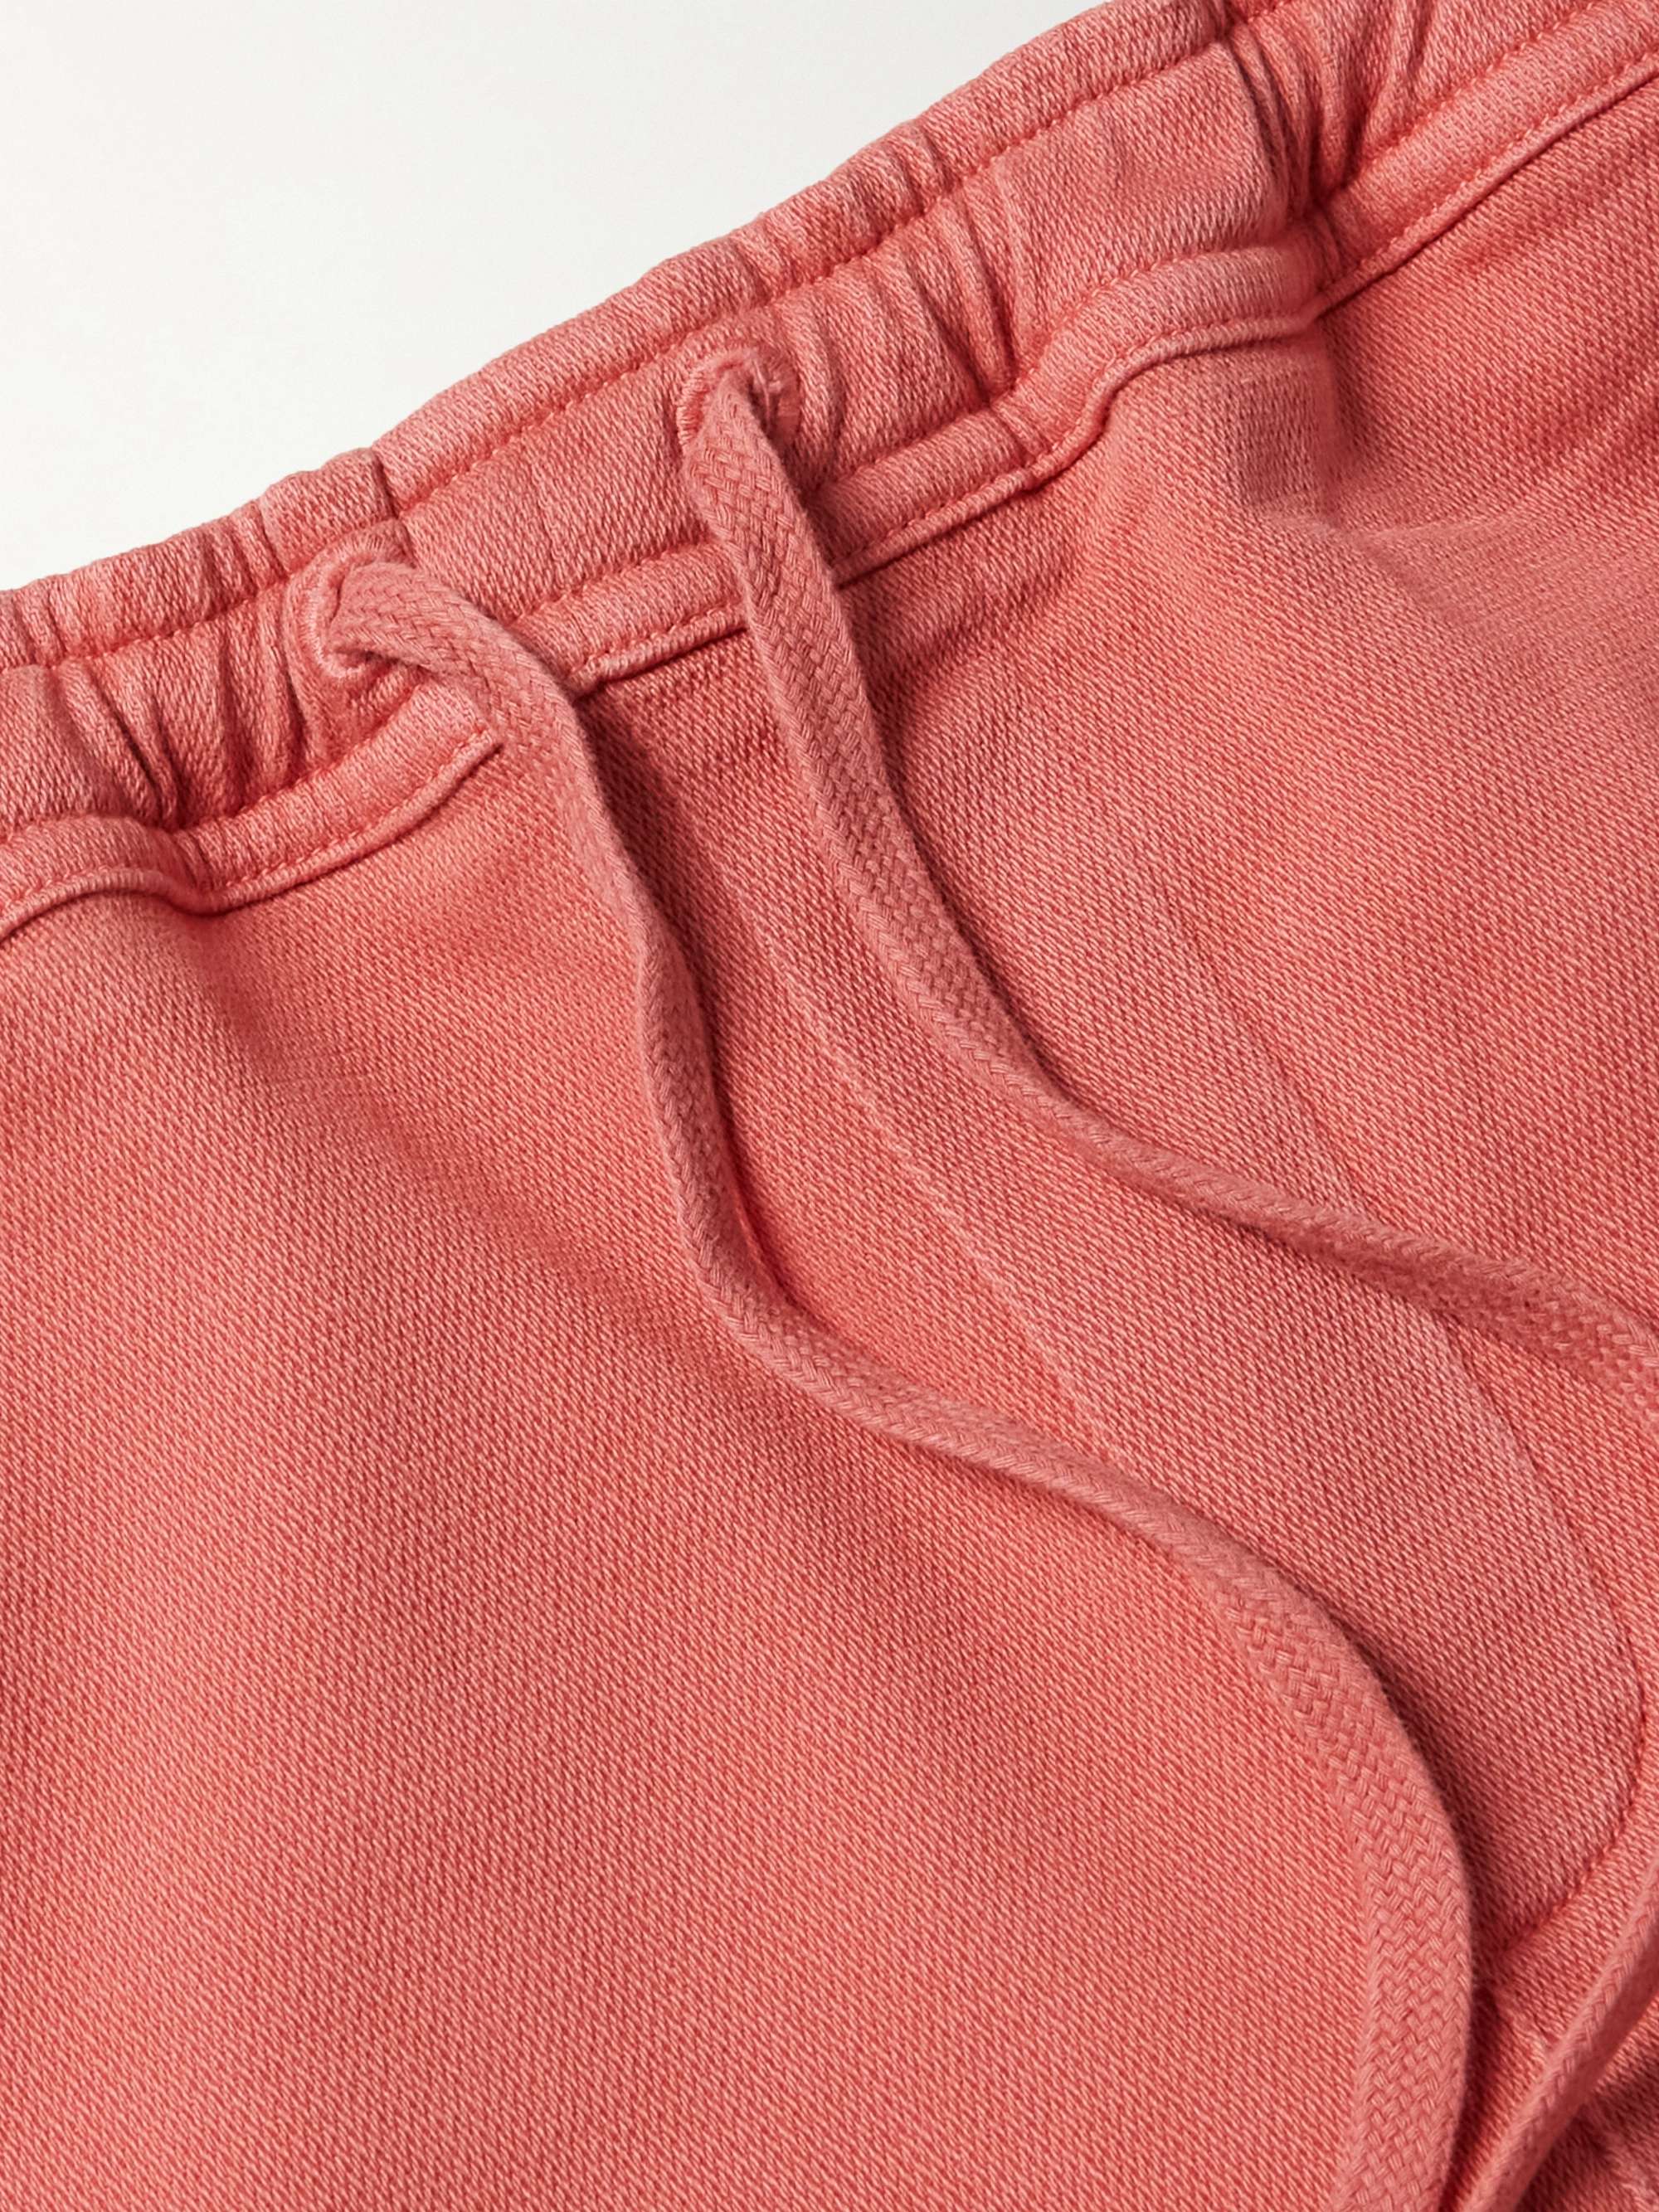 MANAAKI Kai Piped Cotton-Blend Drawstring Shorts